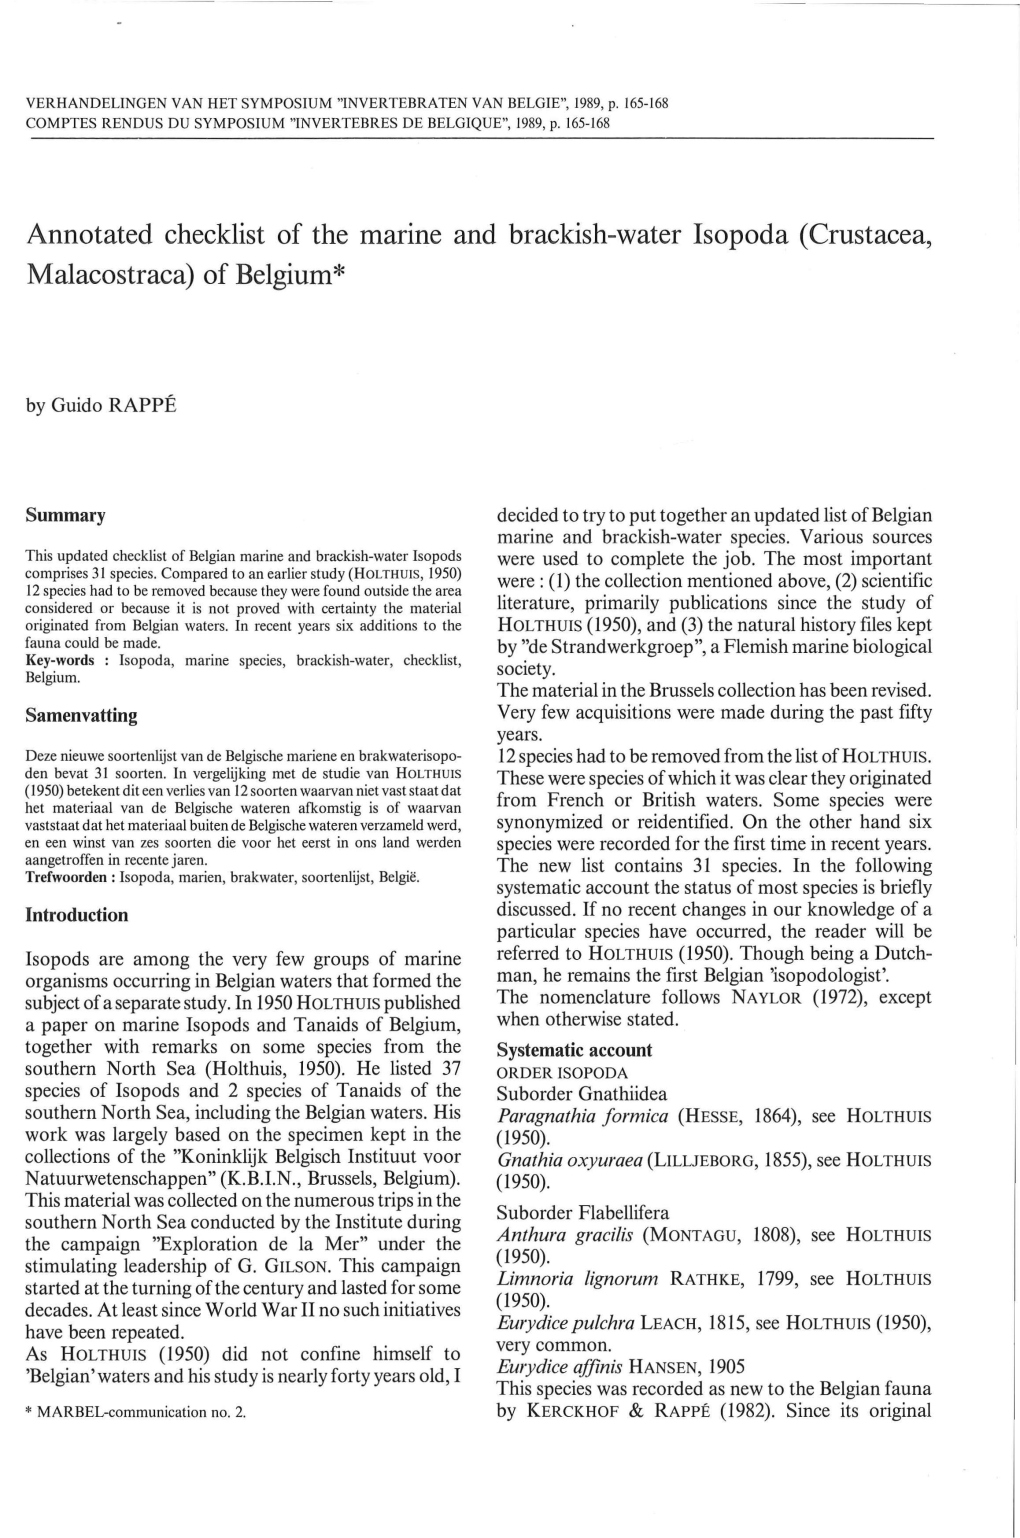 Annotated Checklist of the Marine and Brackish-Water Isopoda (Crustacea, Malacostraca) of Belgium*